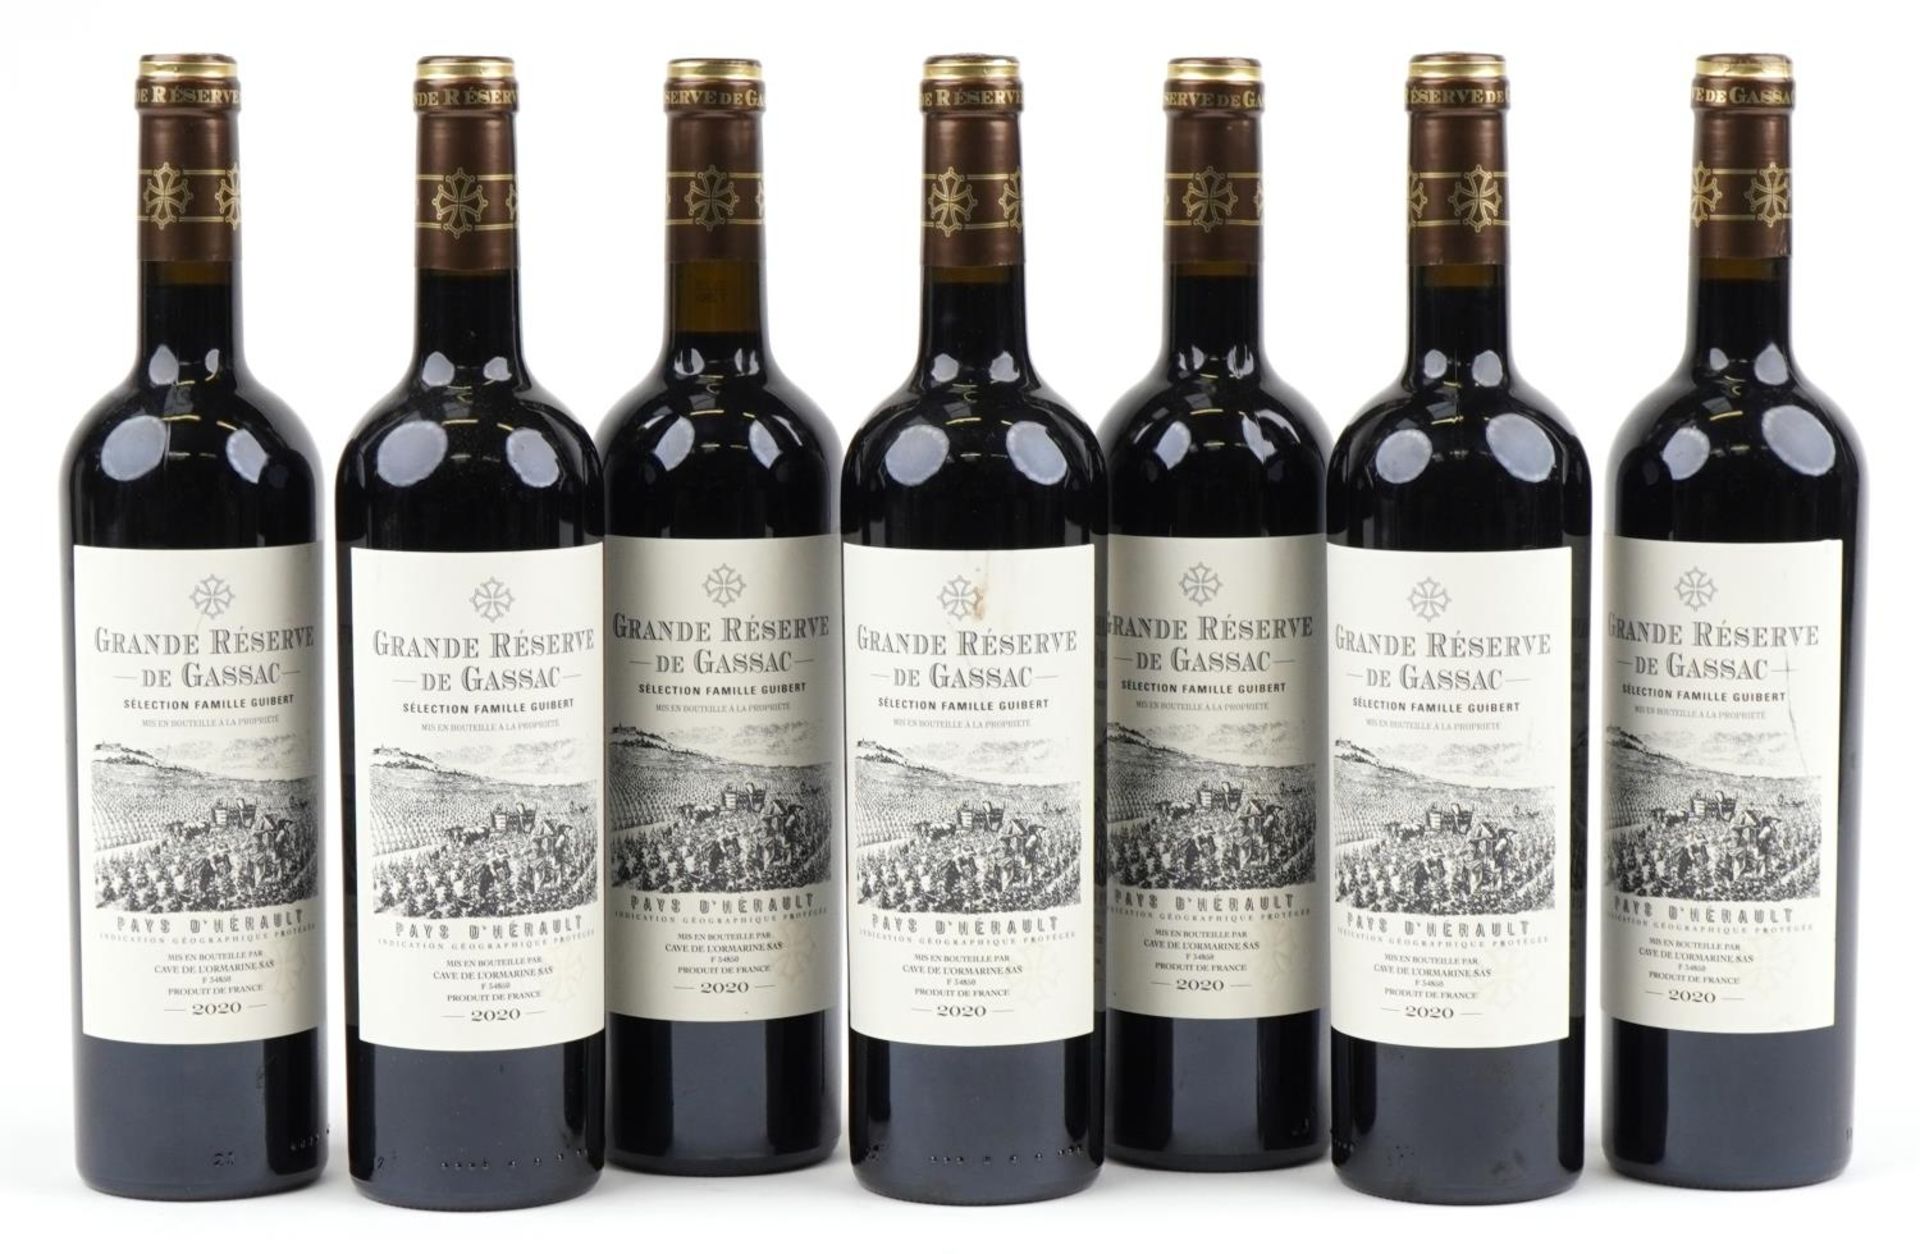 Seven bottles of 2020 Grande Reserve de Gassac Pays d'Herault red wine : For further information